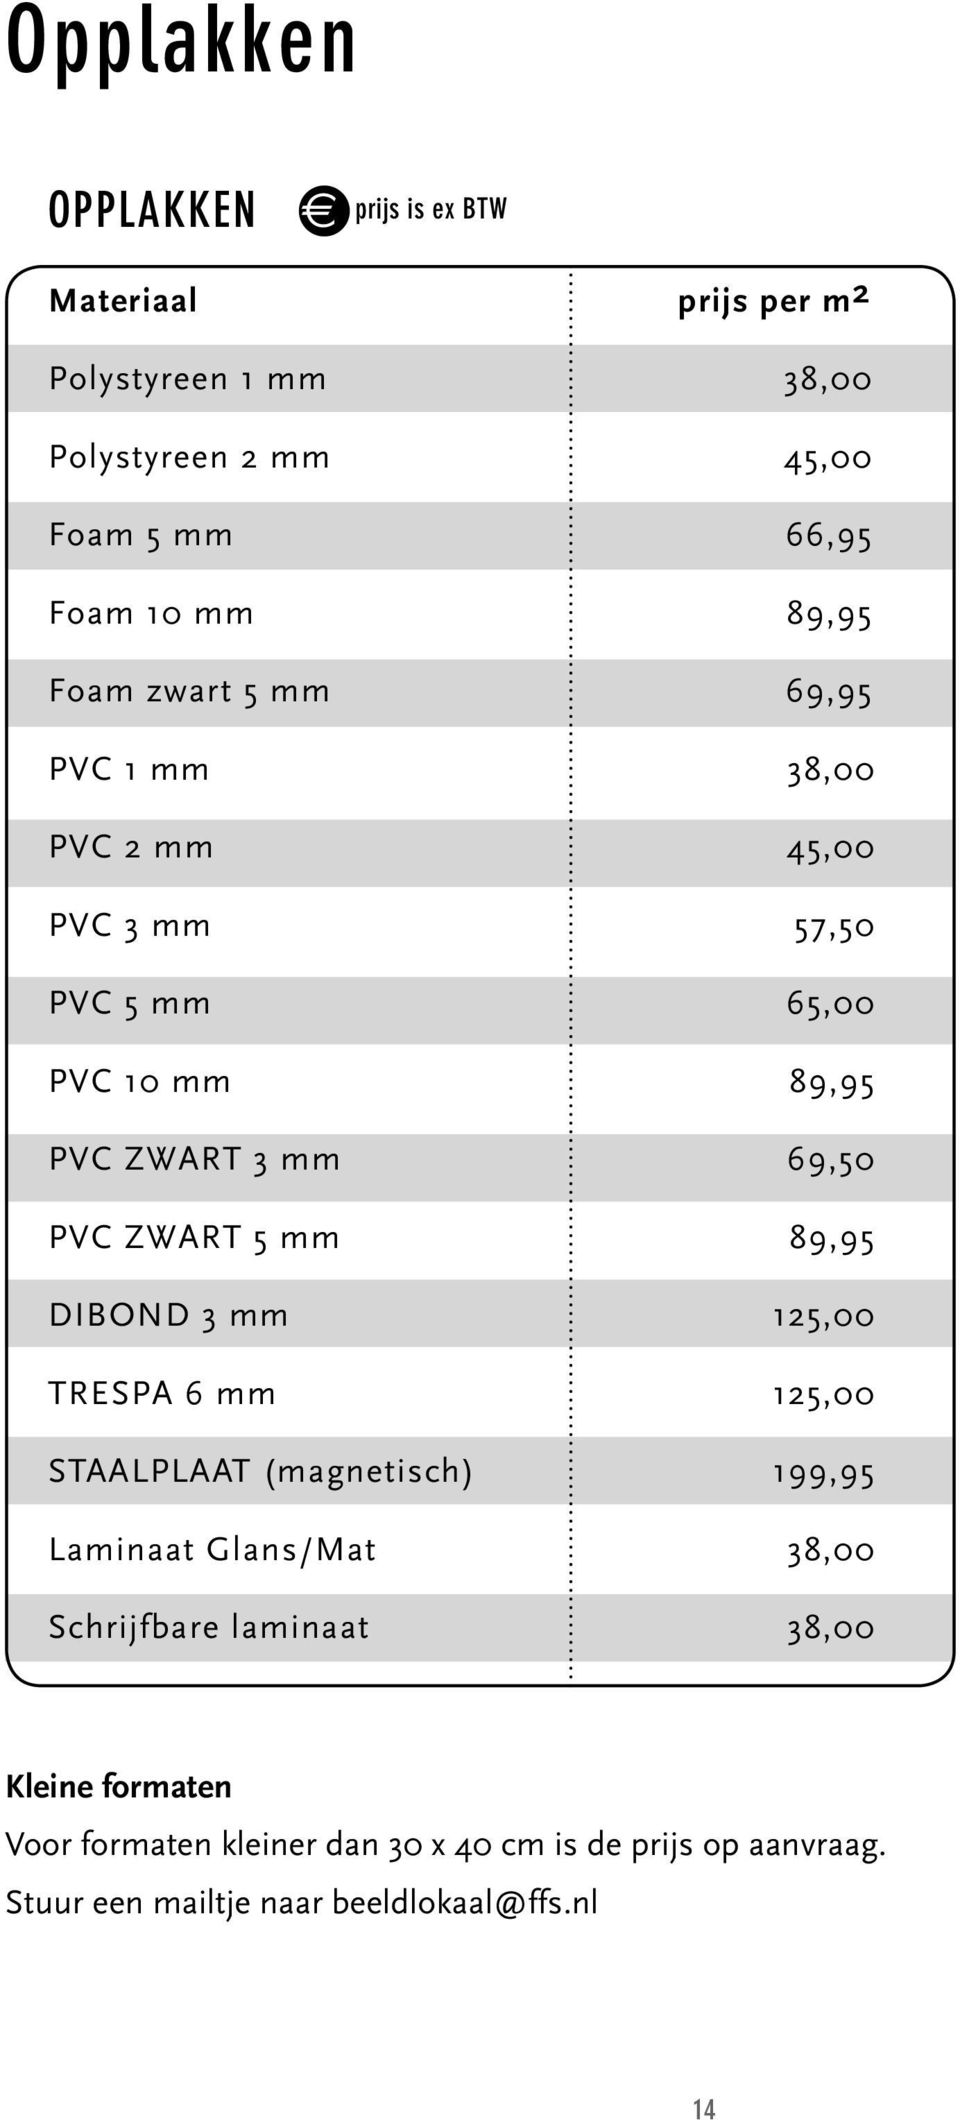 PVC ZWART 5 mm 89,95 DIBOND 3 mm 125,00 TRESPA 6 mm 125,00 STAALPLAAT (magnetisch) 199,95 Laminaat Glans/Mat 38,00 Schrijfbare